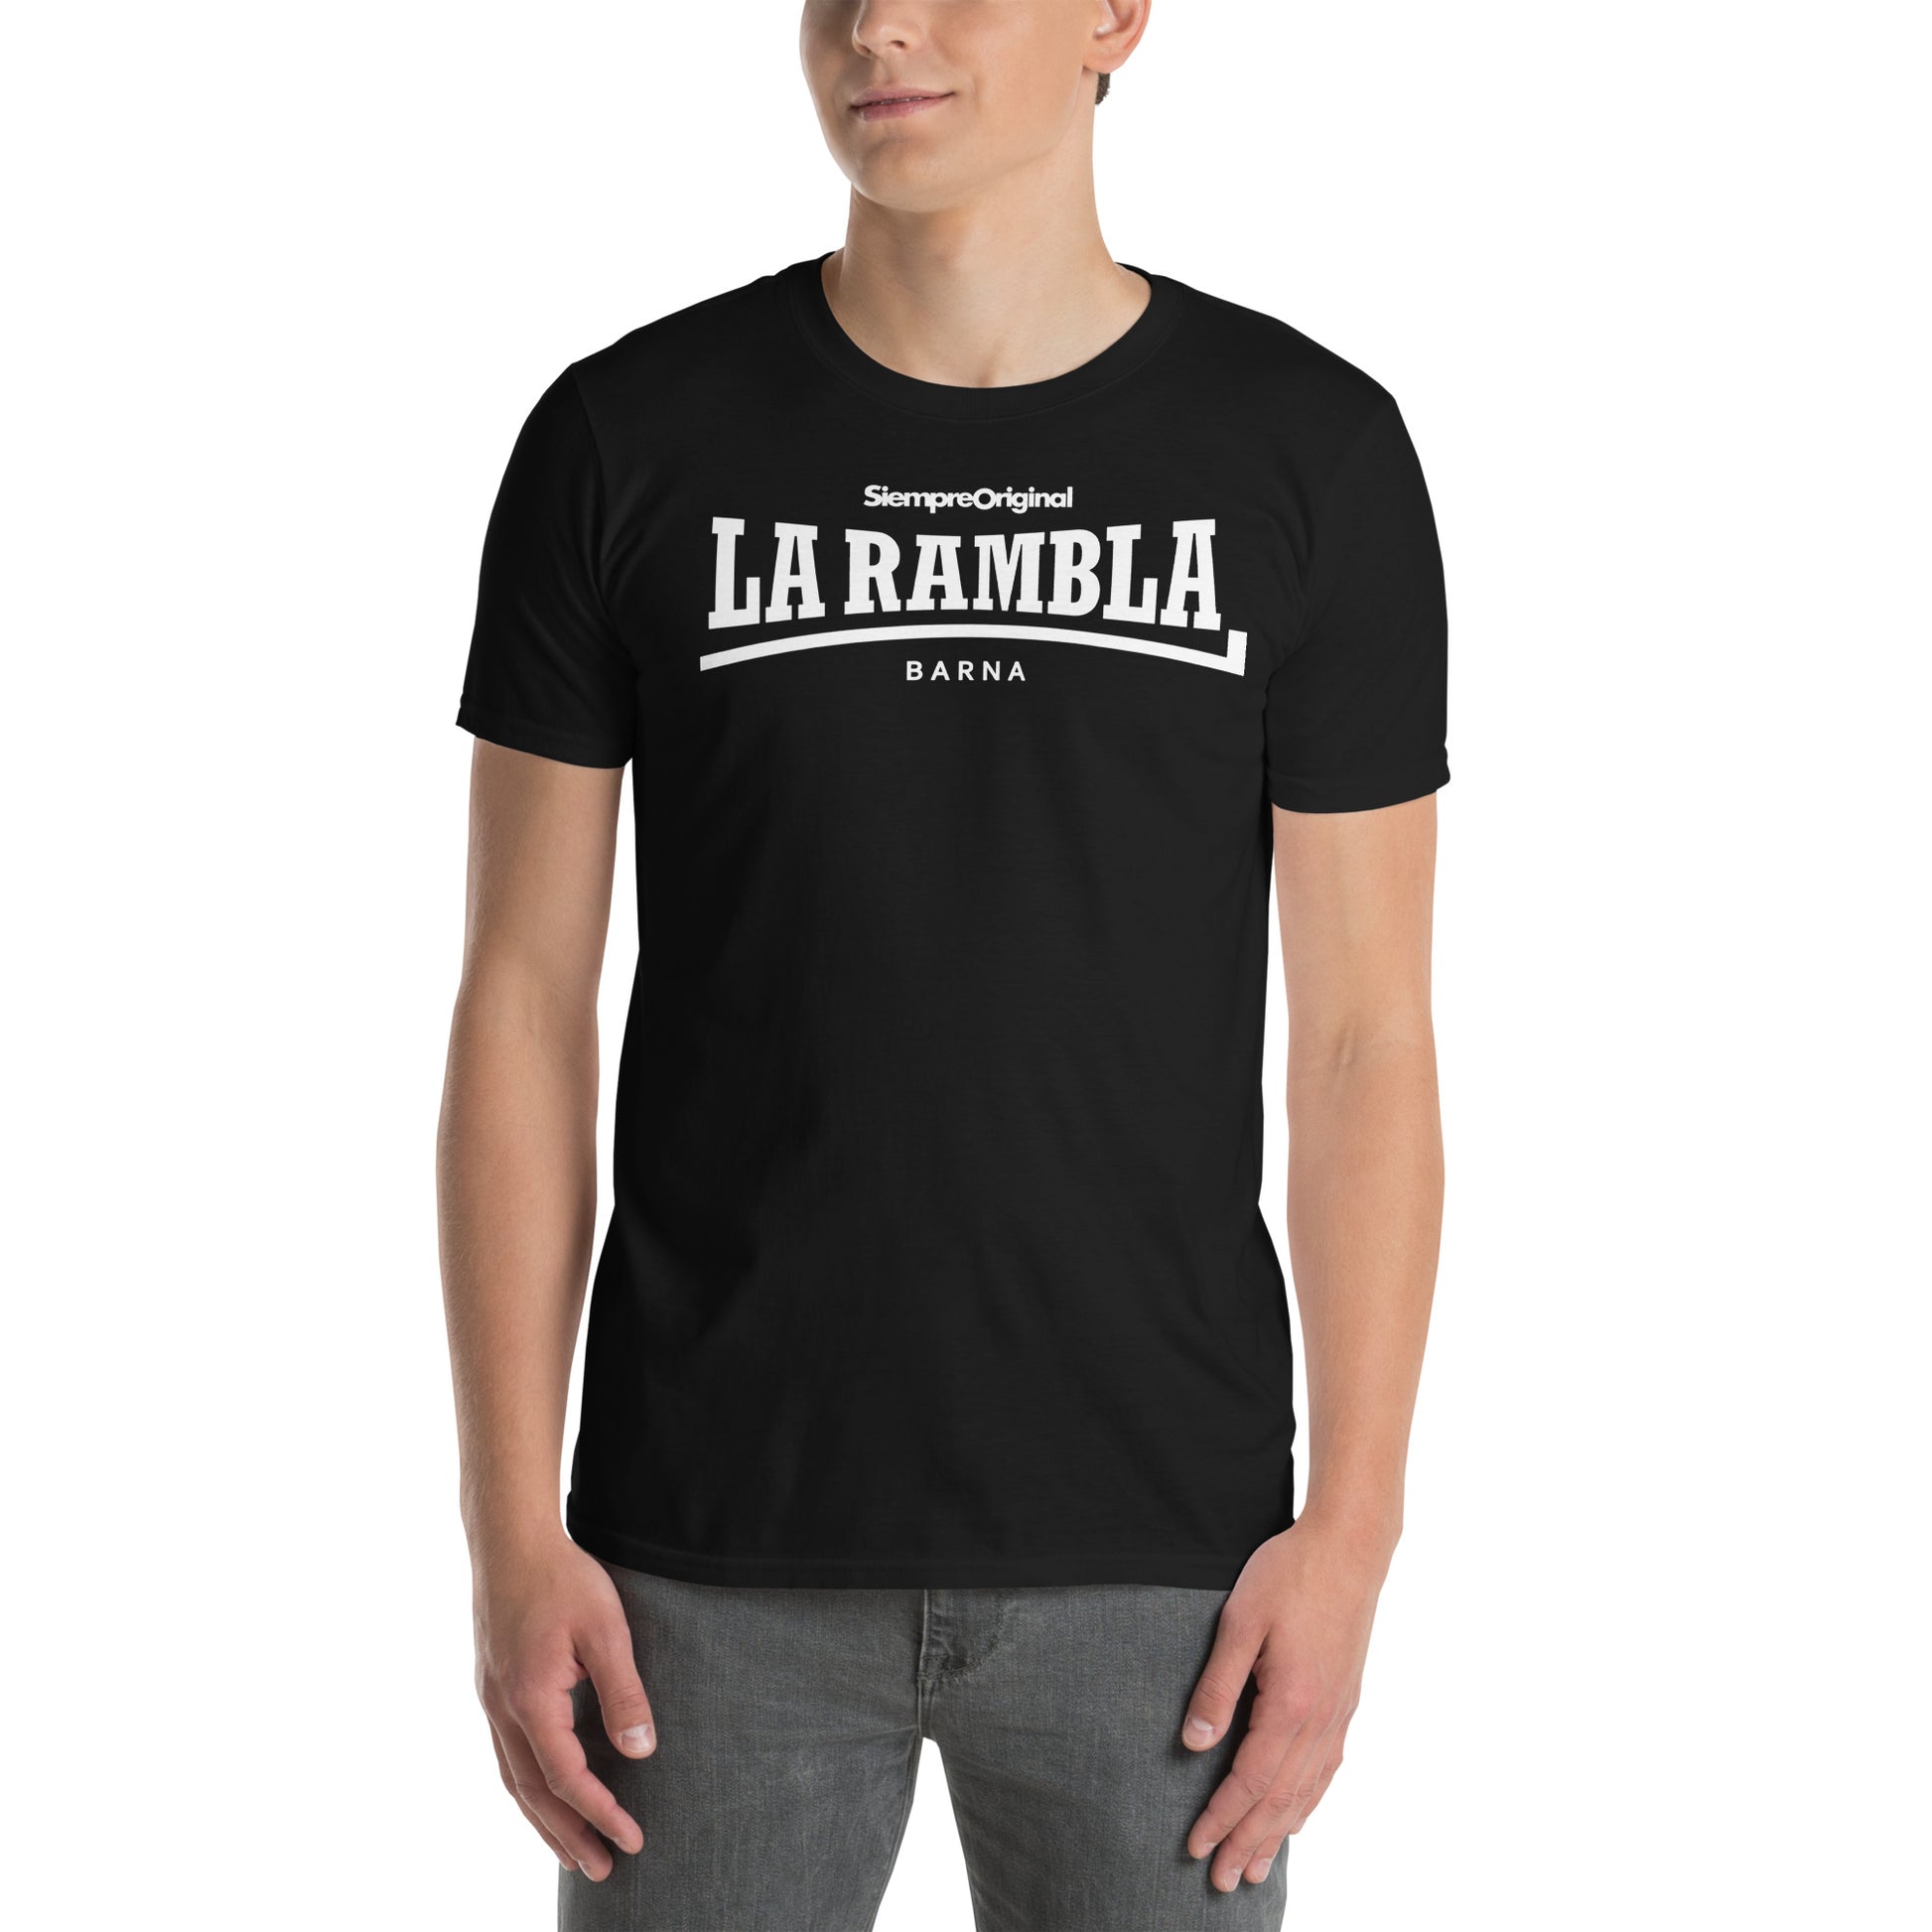 Camiseta de La Rambla - Barcelona. Color Negro.